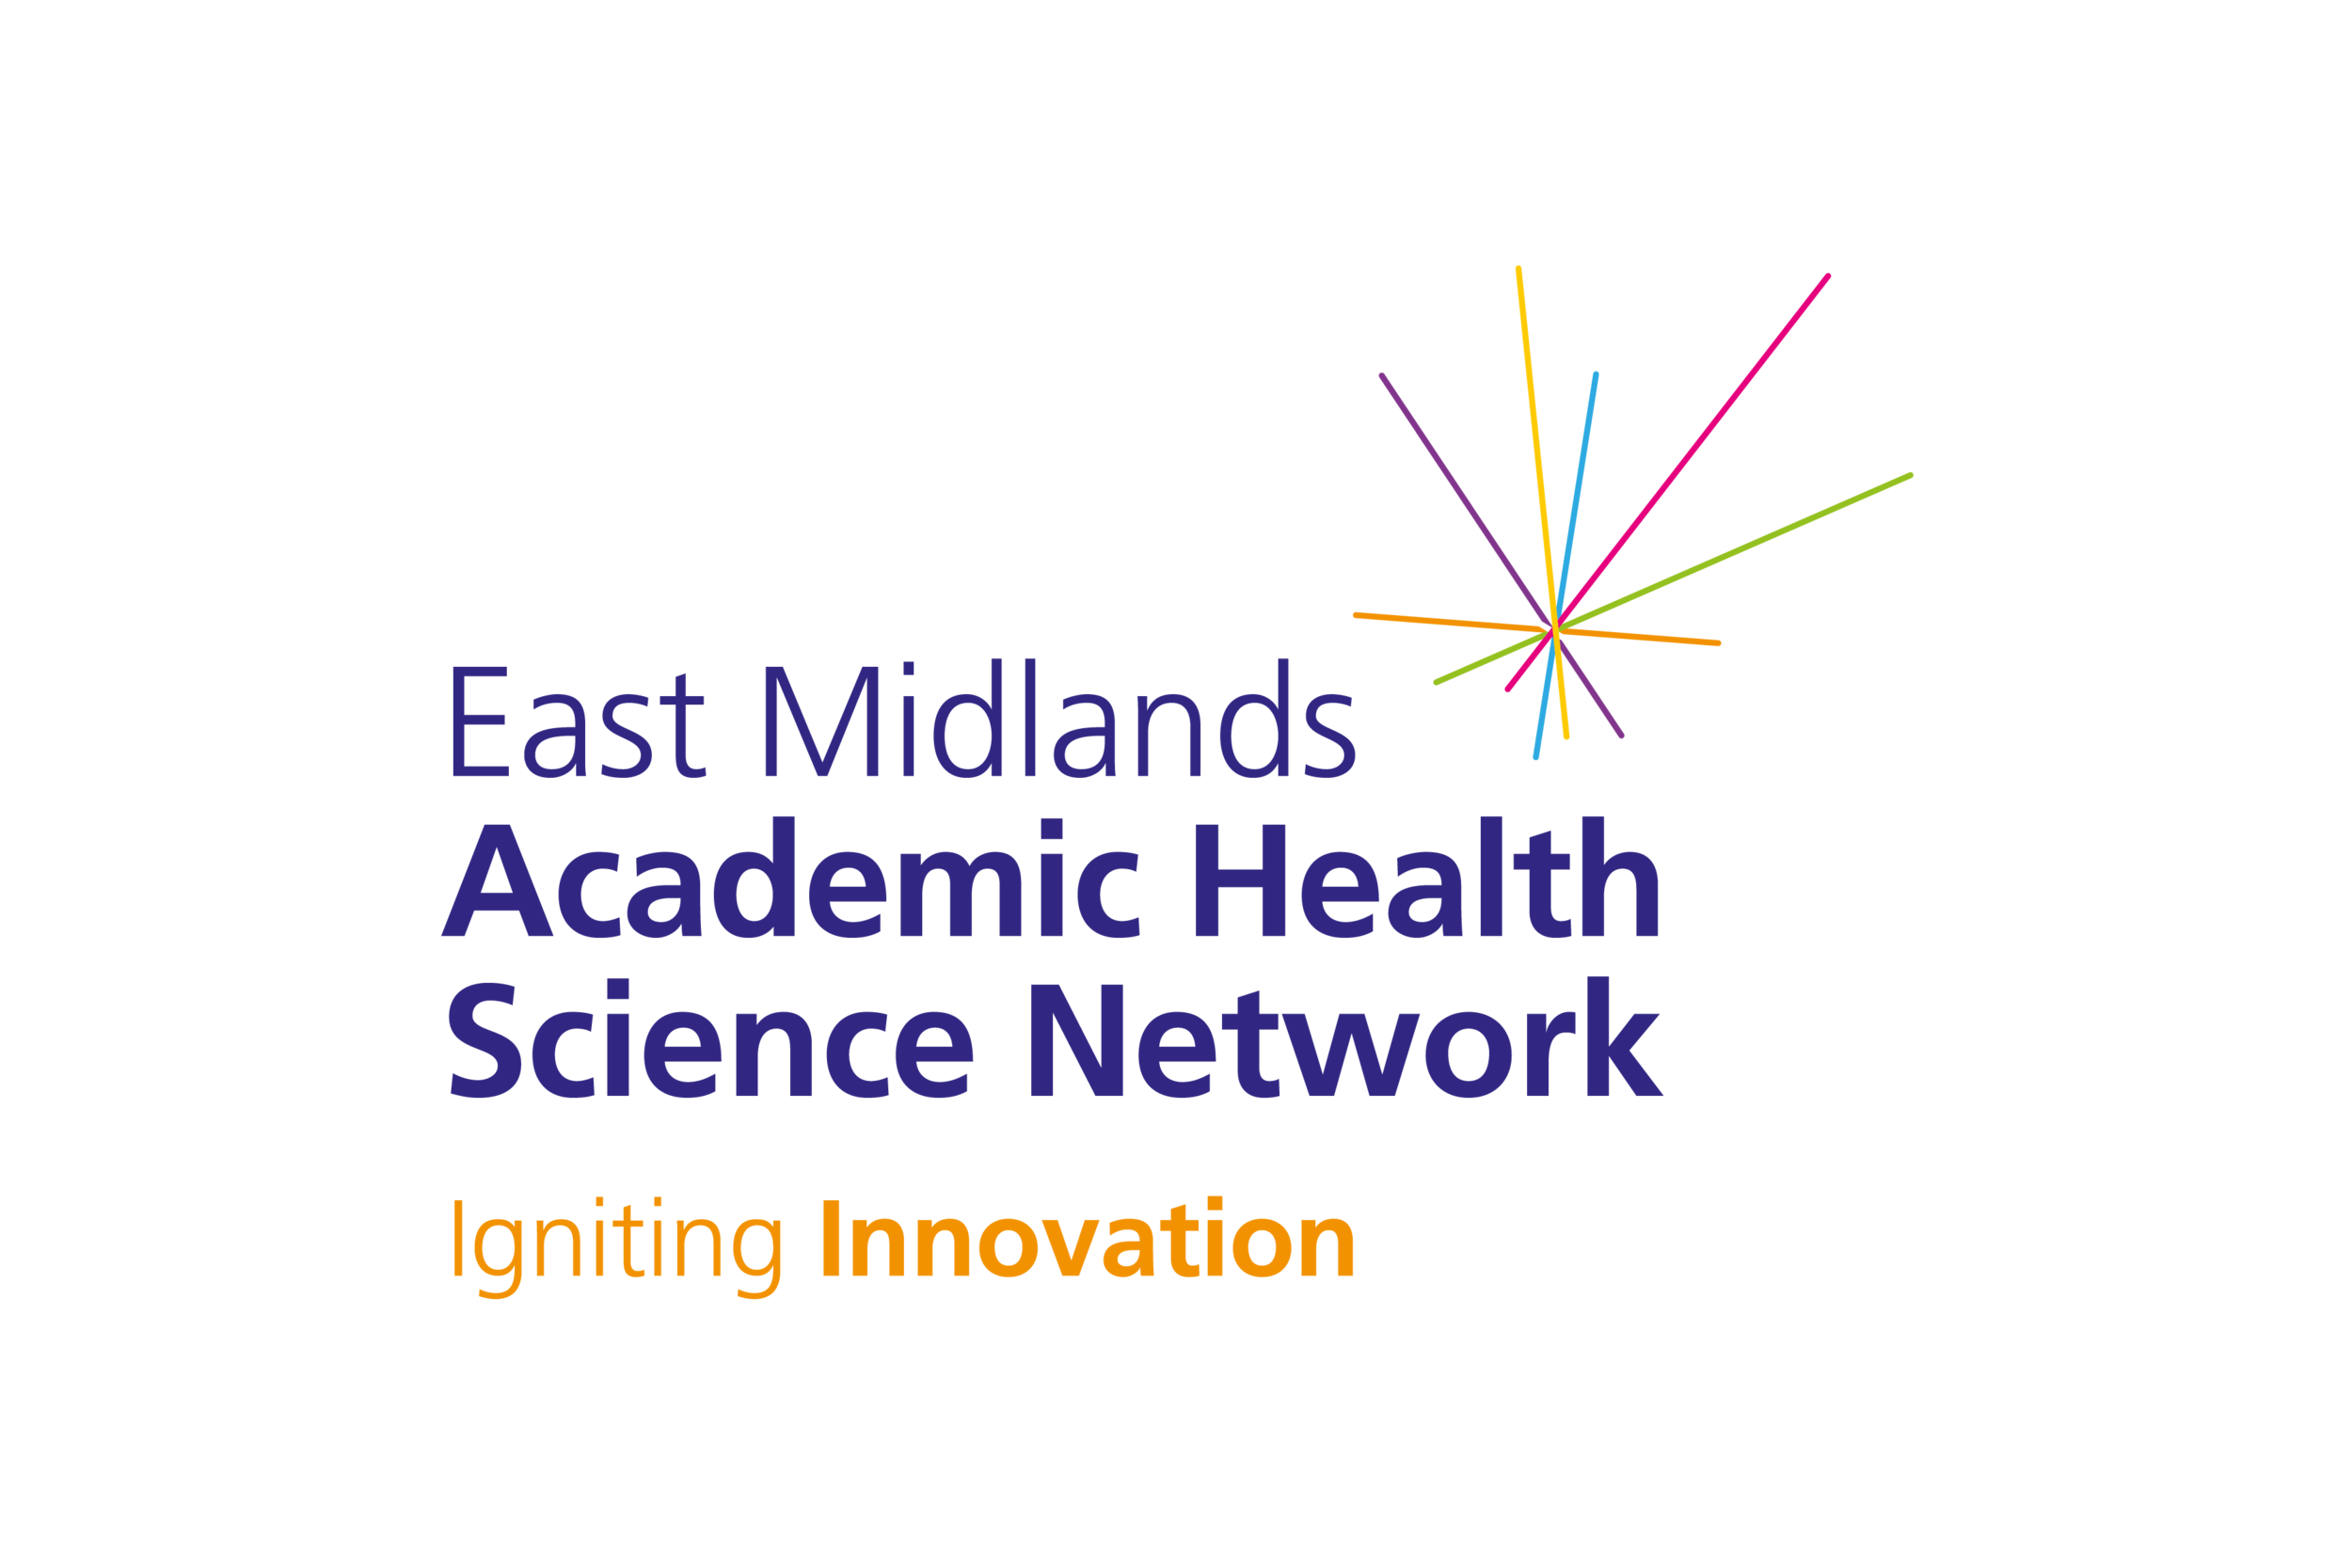 East Midlands Academic Health Science Network